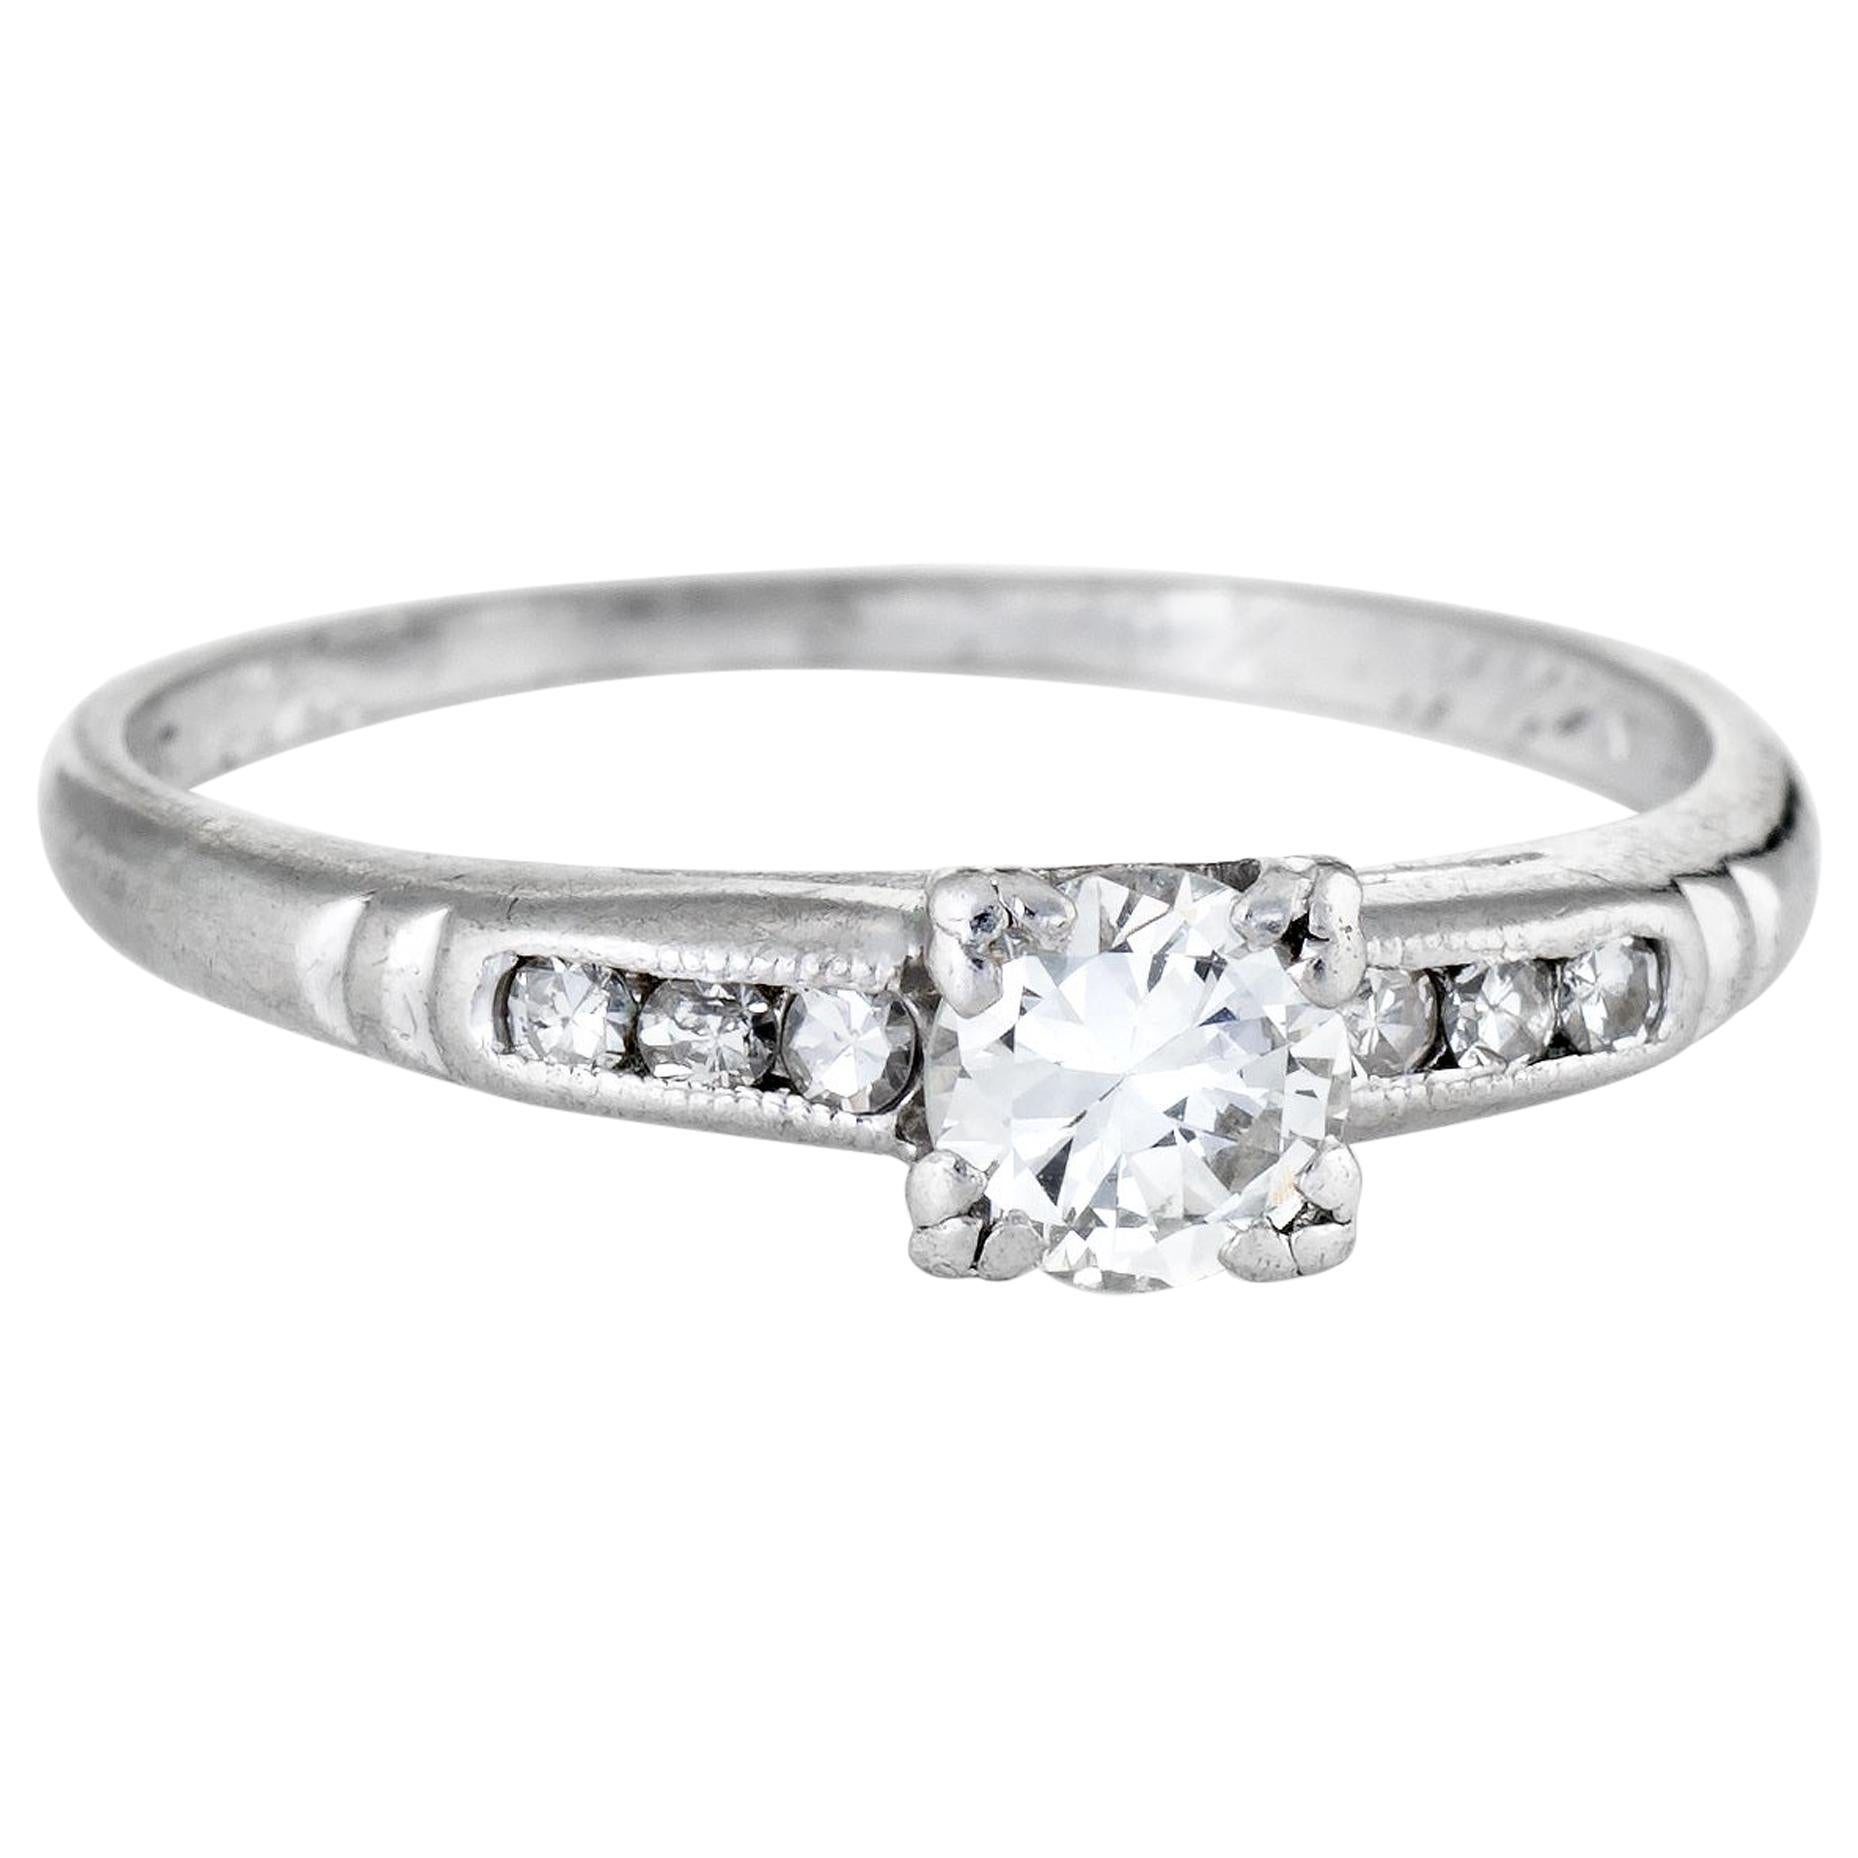 Antique Deco Diamond Ring Platinum Engagement Vintage Fine Jewelry Bridal